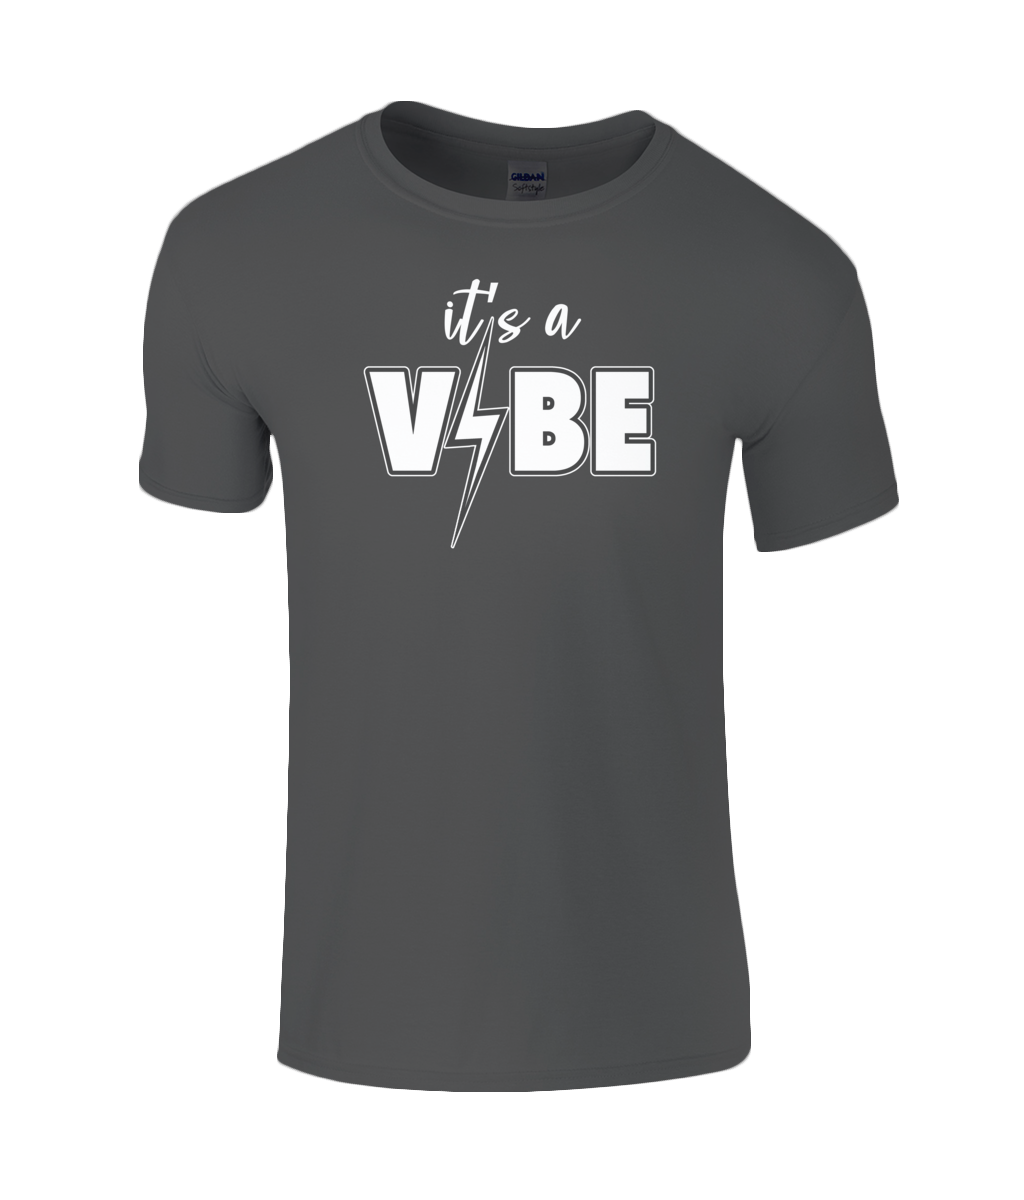 it's a VIBE Kids T-Shirt